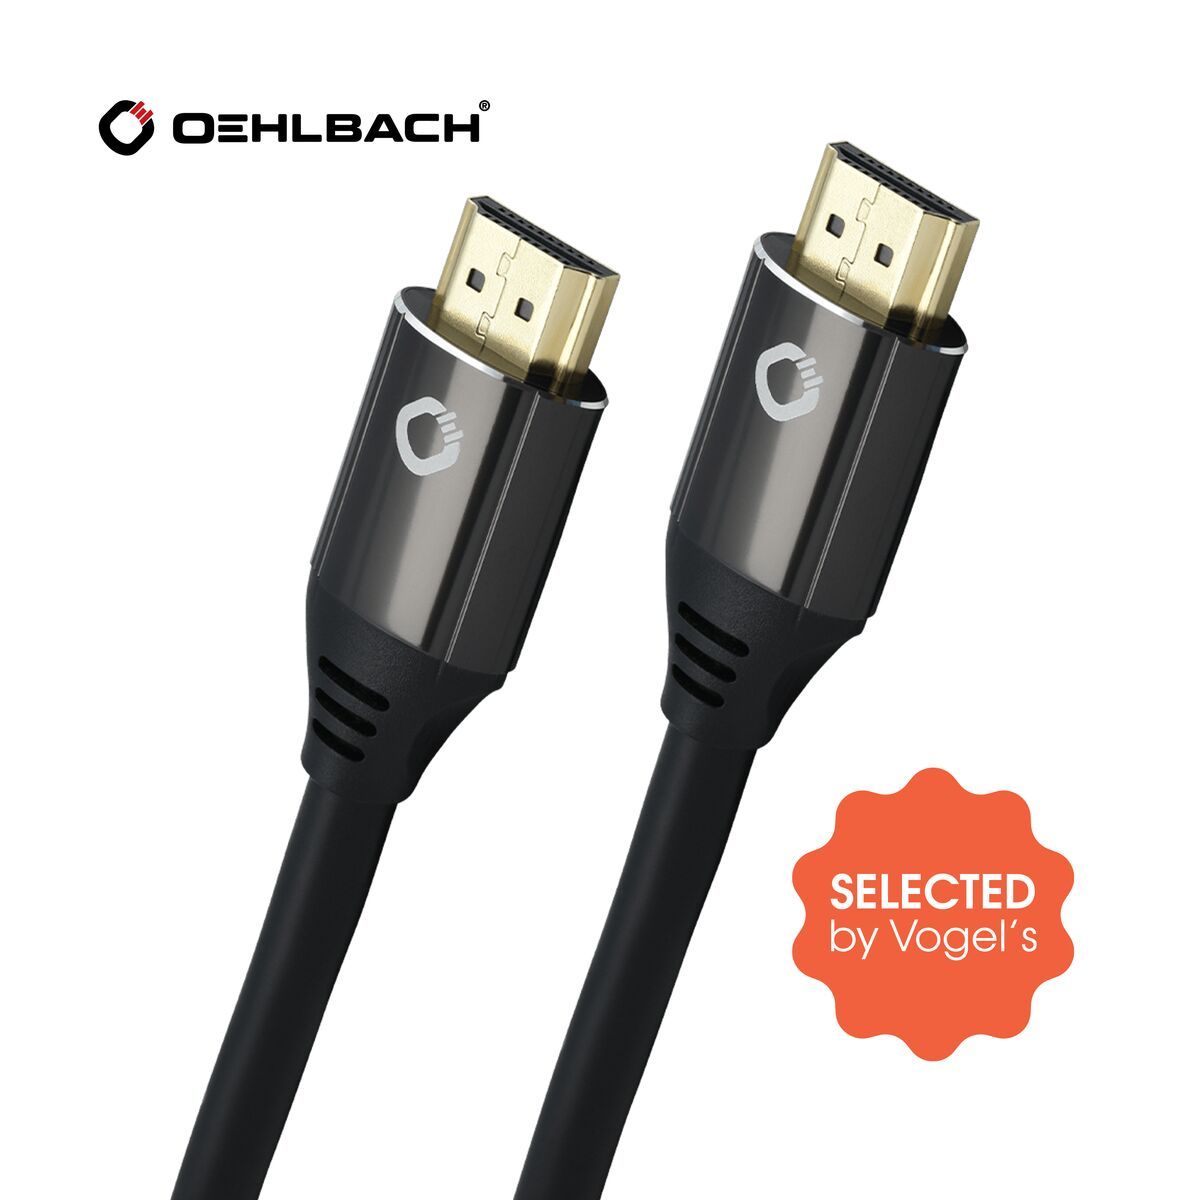 Vogel's Oehlbach Câble HDMI® Black Magic (3 mètres) Noir Promo